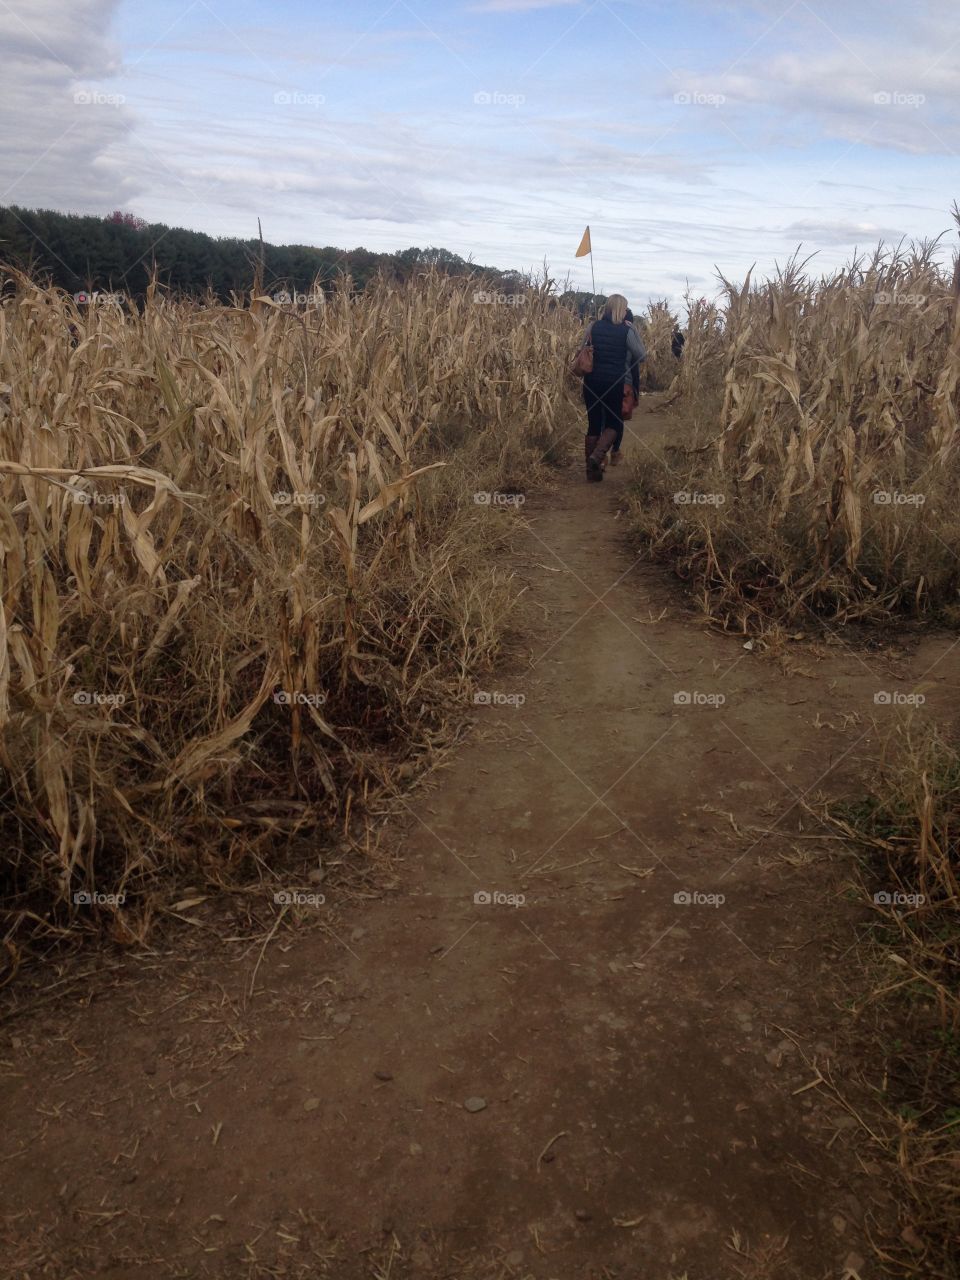 Pennsylvania cornfield. Fun weekend in PA at Lillivan farms